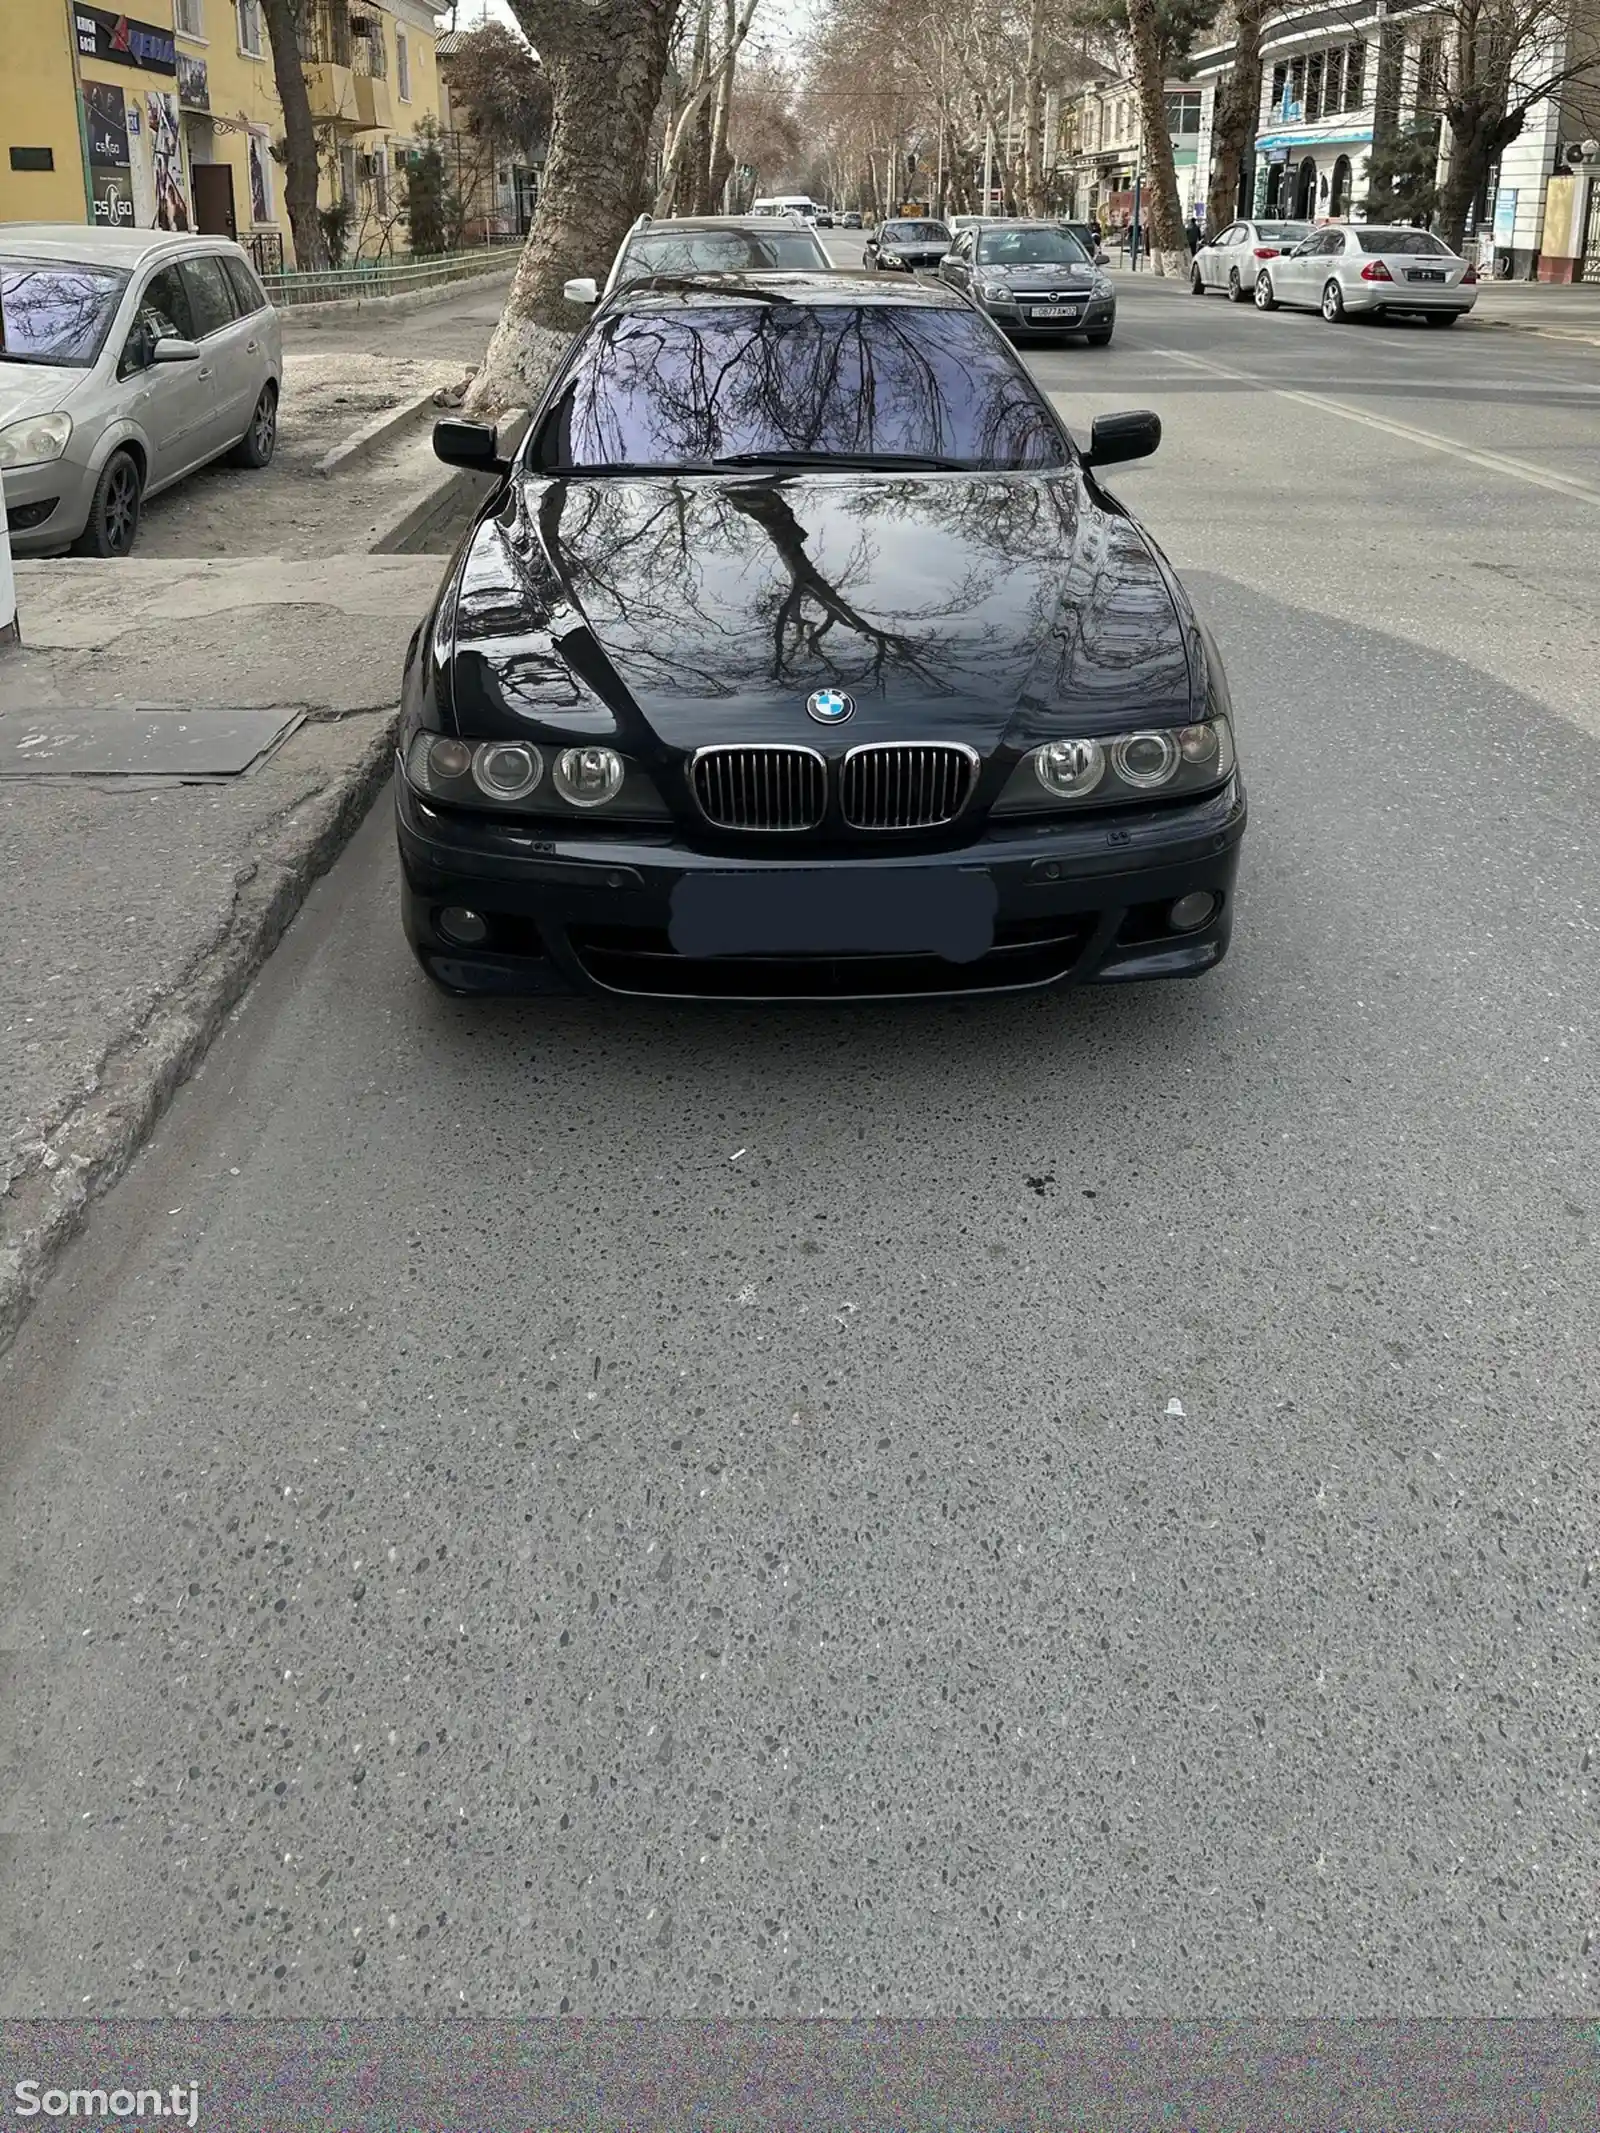 BMW 5 series, 2000-6